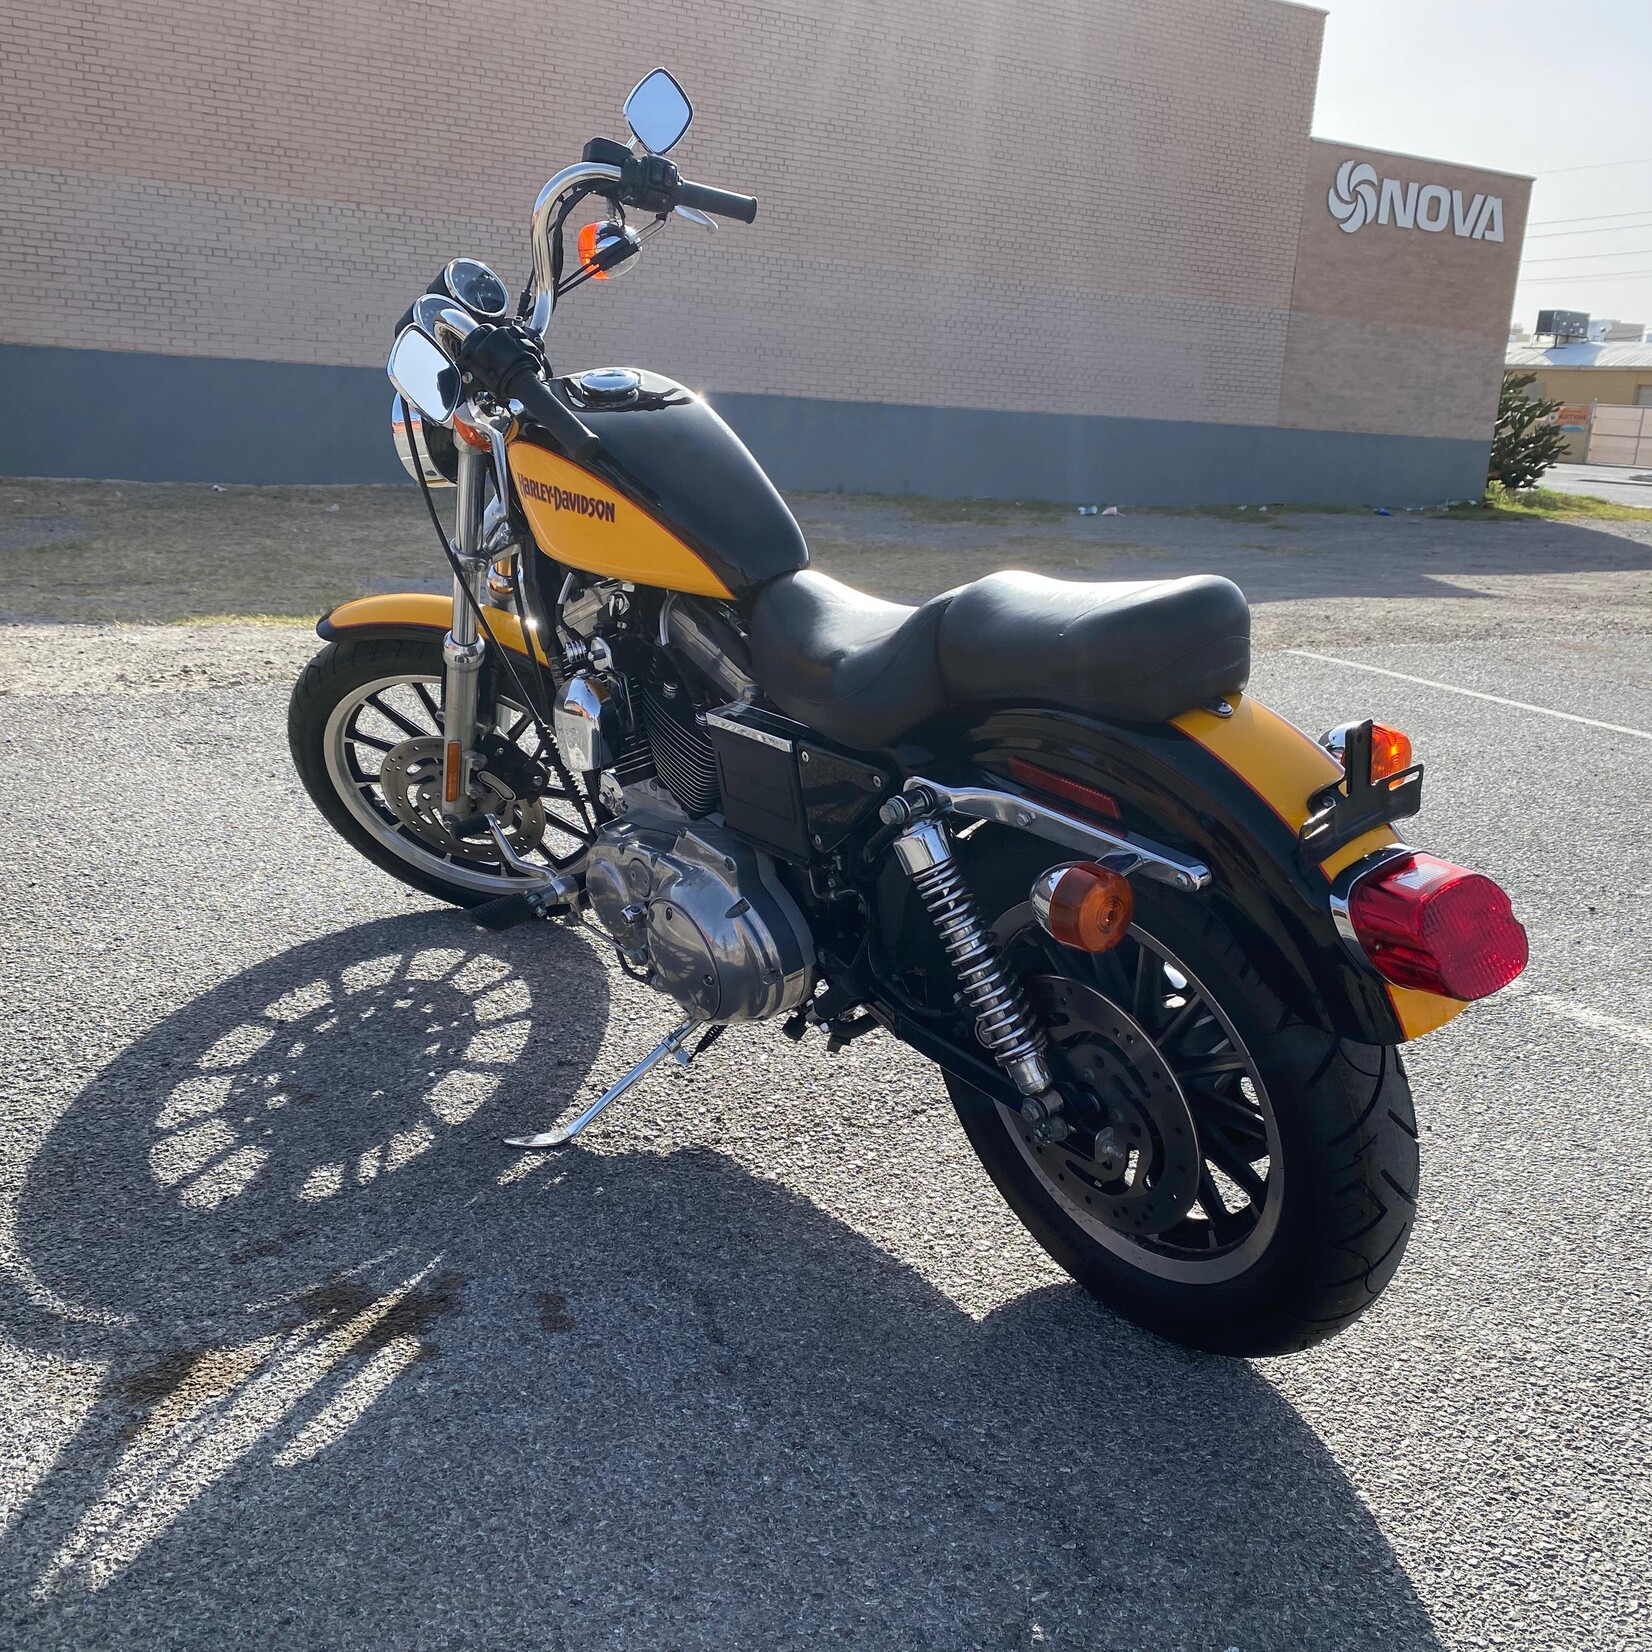 2001 Harley Davidson XL1200 Cruiser Motorcycle for Sale